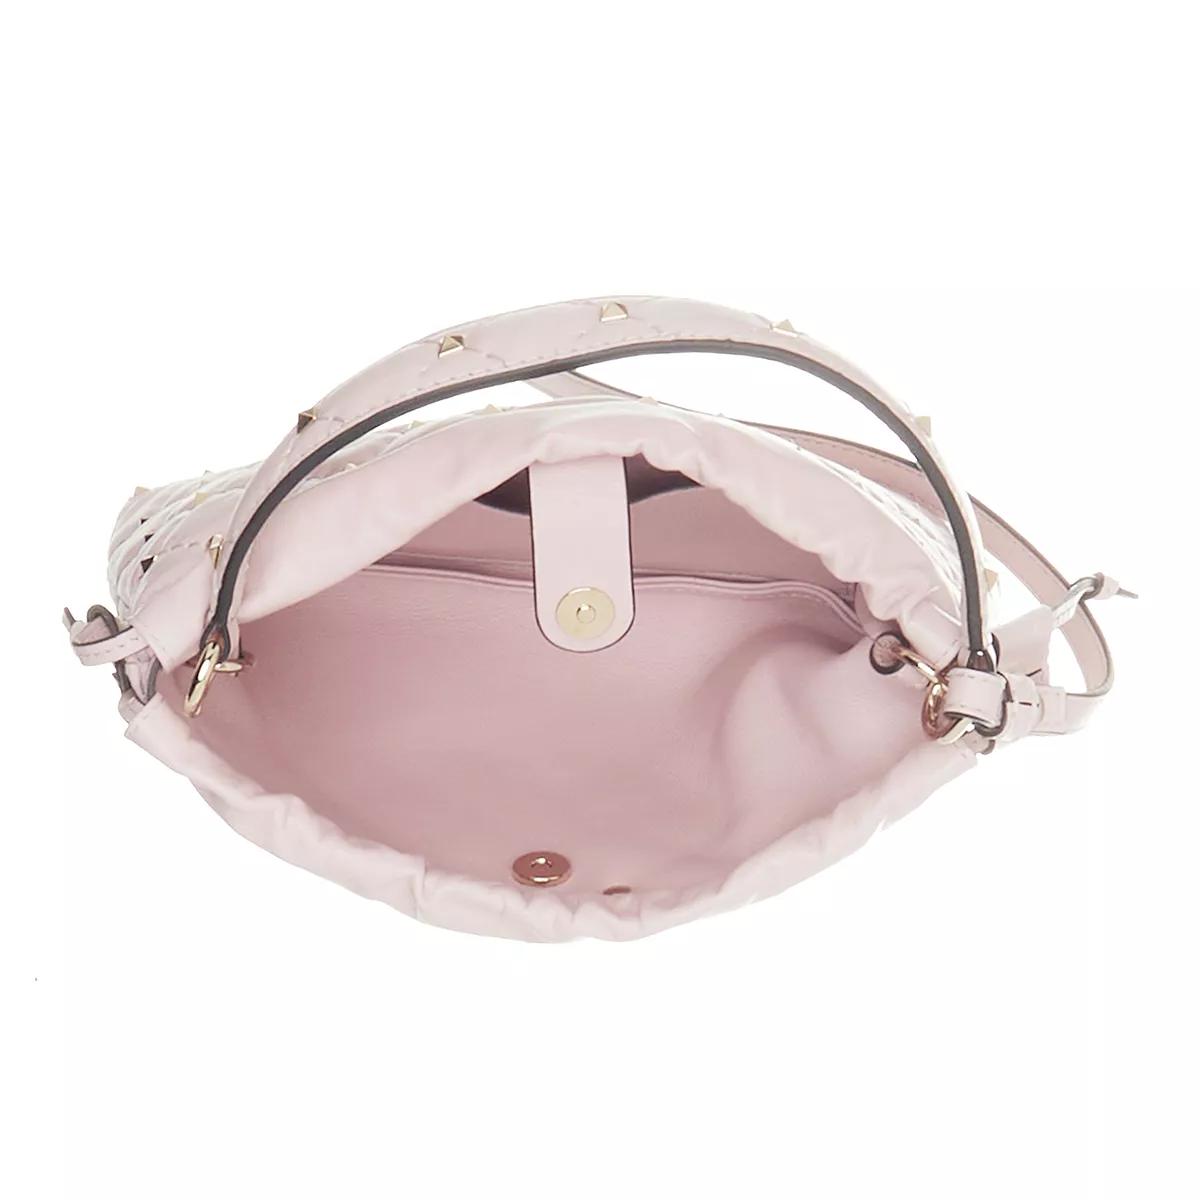 Valentino Garavani Bucket bags Small Shoulder Bag in poeder roze